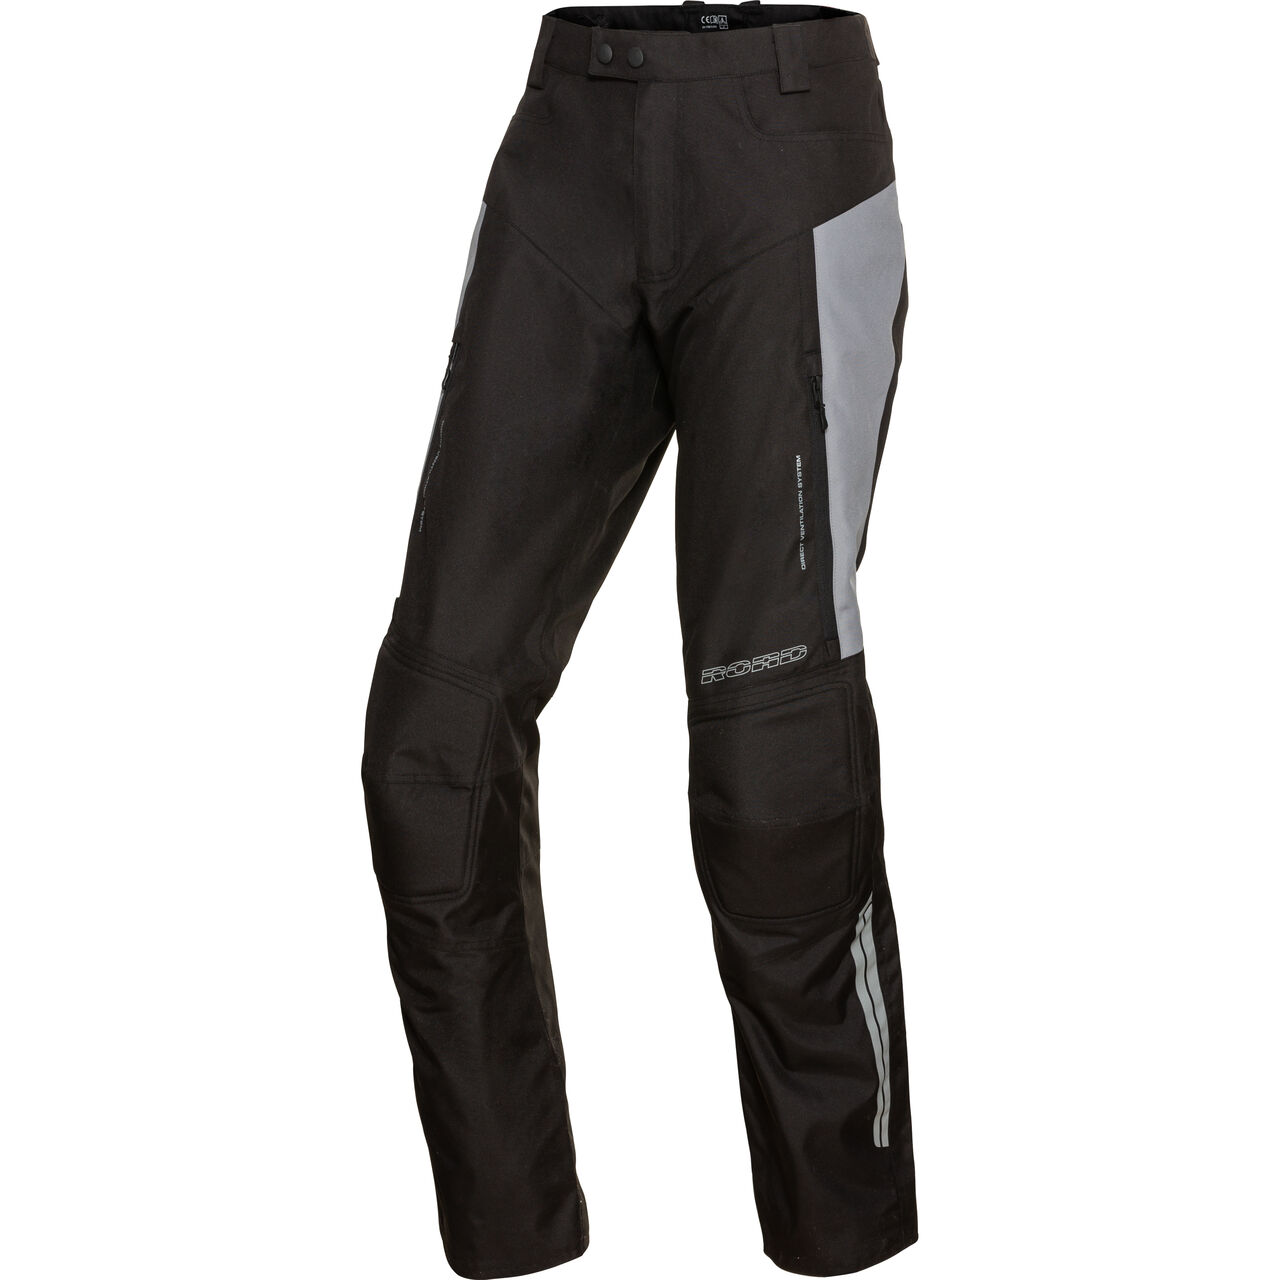 Touring Textile trousers 2.0 black/grey